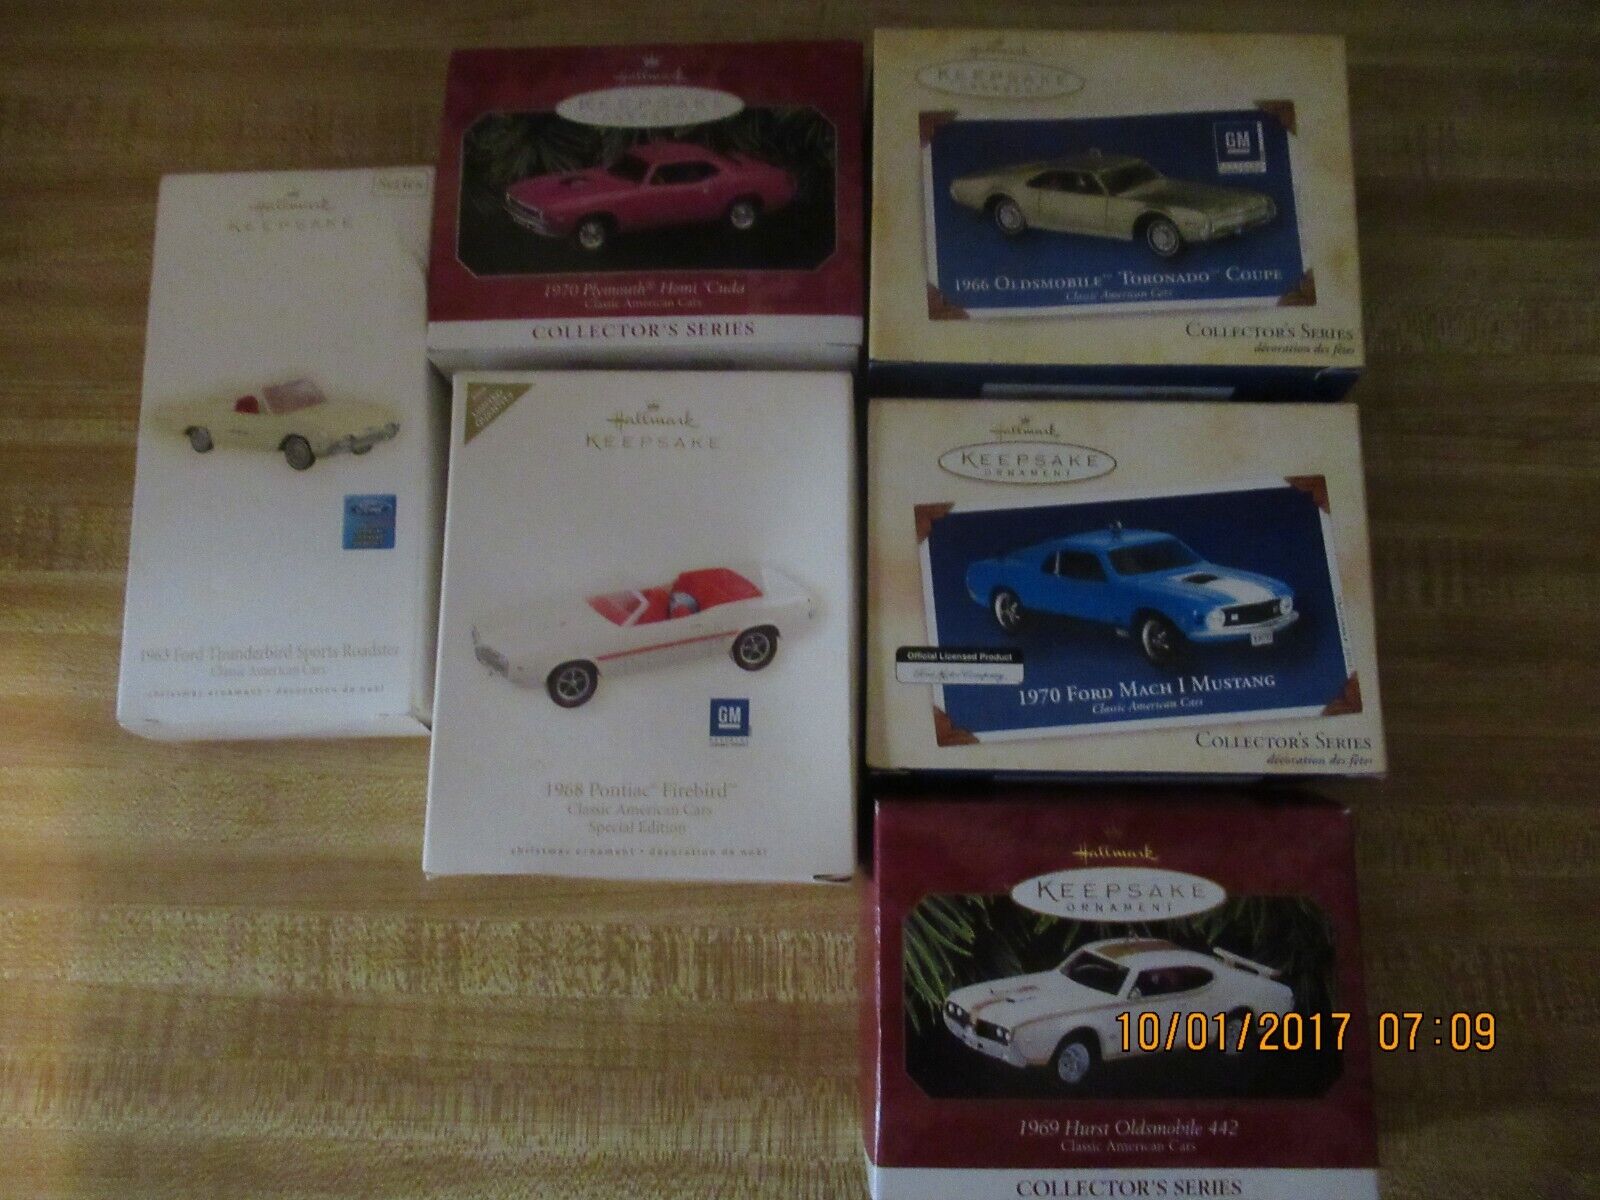 6 hallmark keepsake classic car ornaments 2 fords/2 oldsmobile/ 1 plymouth/1 pon